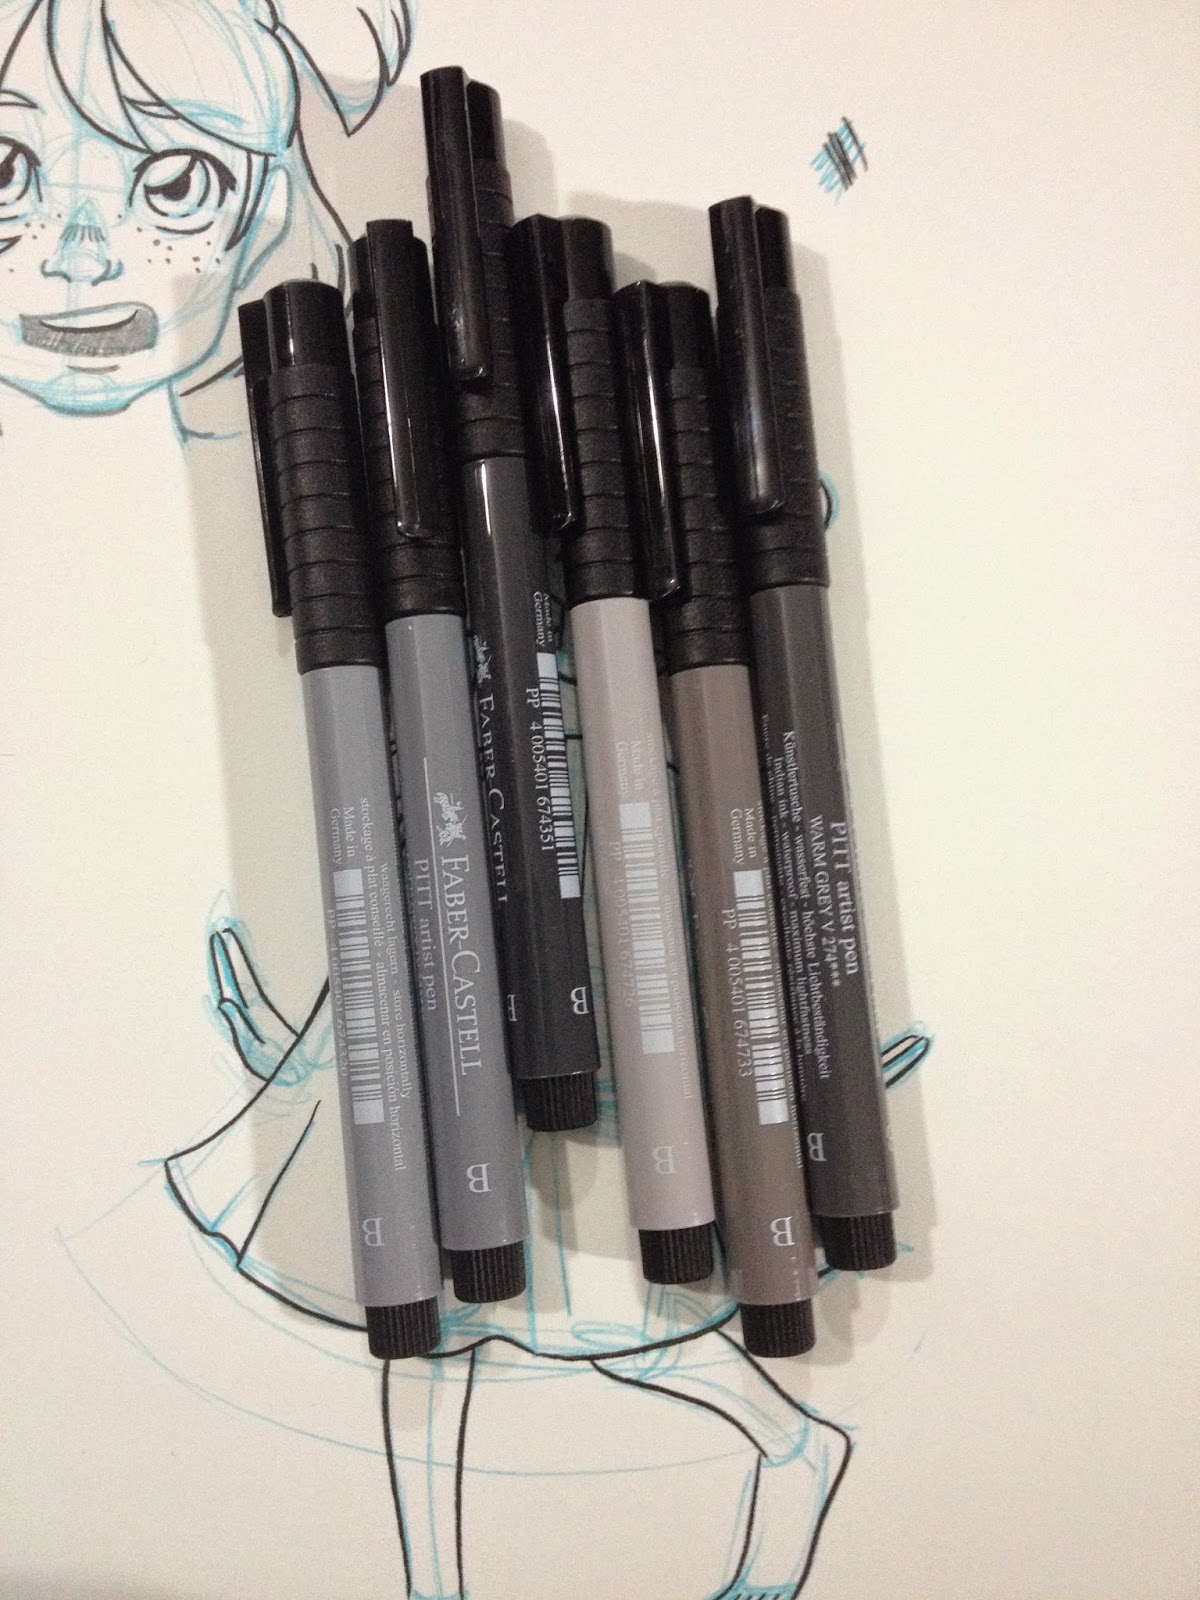 Drawing Pens 12-Pack, Art Pens Anime Pens Sketch Pens Precision Multiliner  Pens ink Pens Calligraphy Pens Design Pens Office School Supplies Drawing  Supplies Artists Line Art Supplies Design Supplies : Arts, Crafts & Sewing  